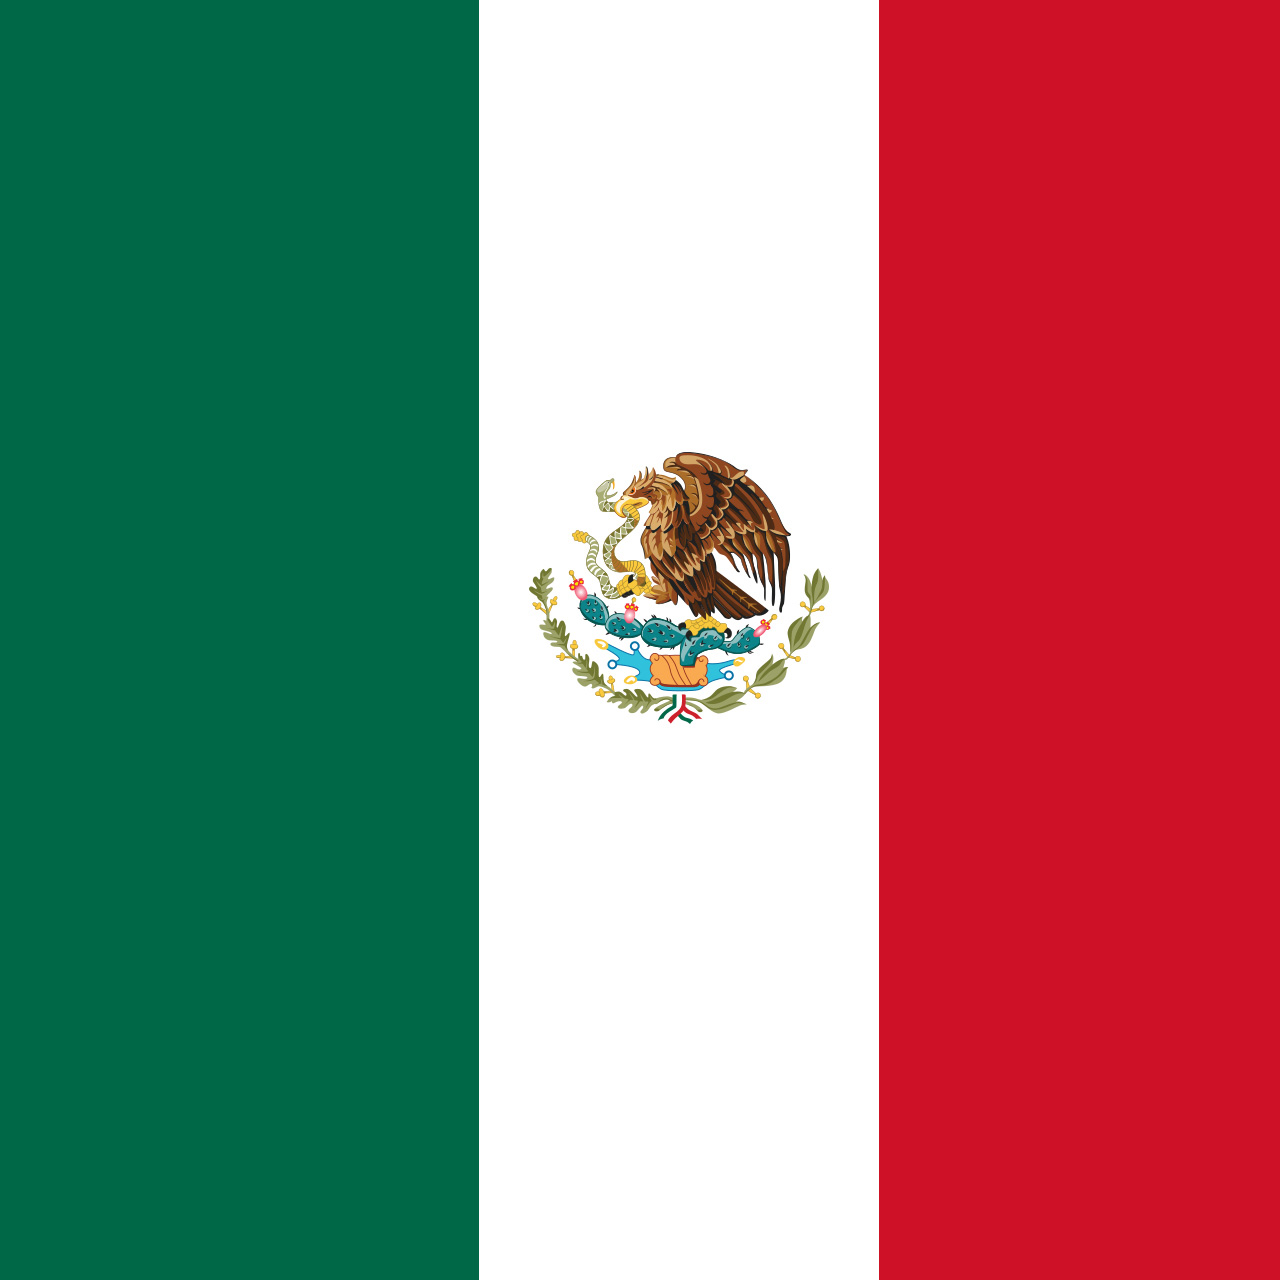 https://neelikon.com/wp-content/uploads/2022/02/Mexico.jpg